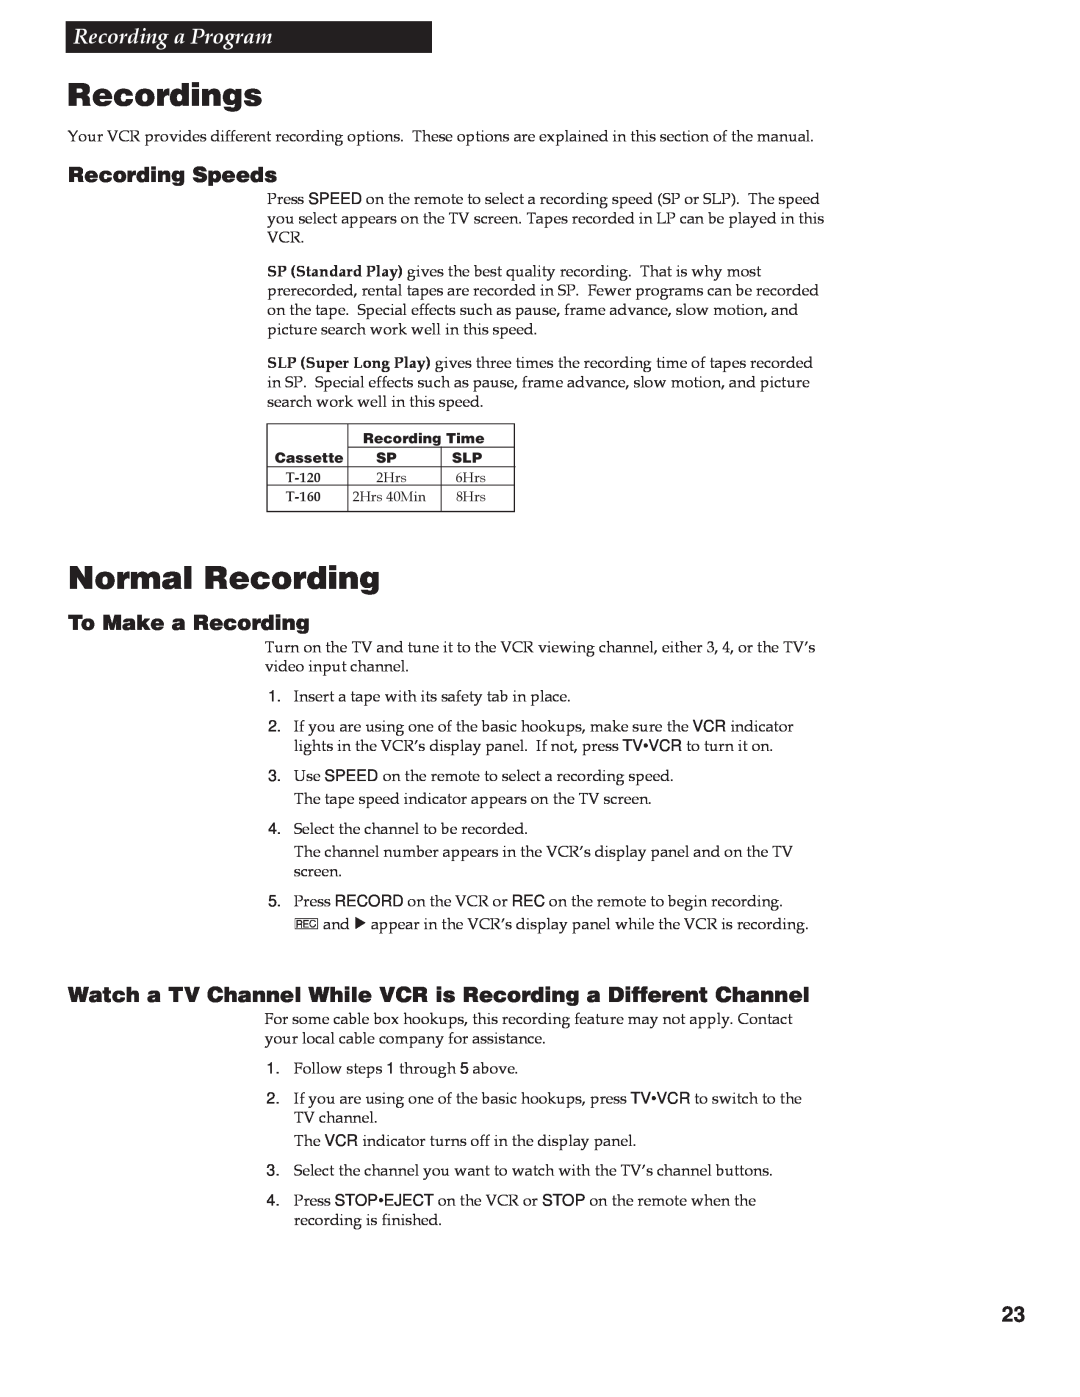 RCA VR642HF manual Recordings, Normal Recording, Recording a Program, Recording Speeds, To Make a Recording 